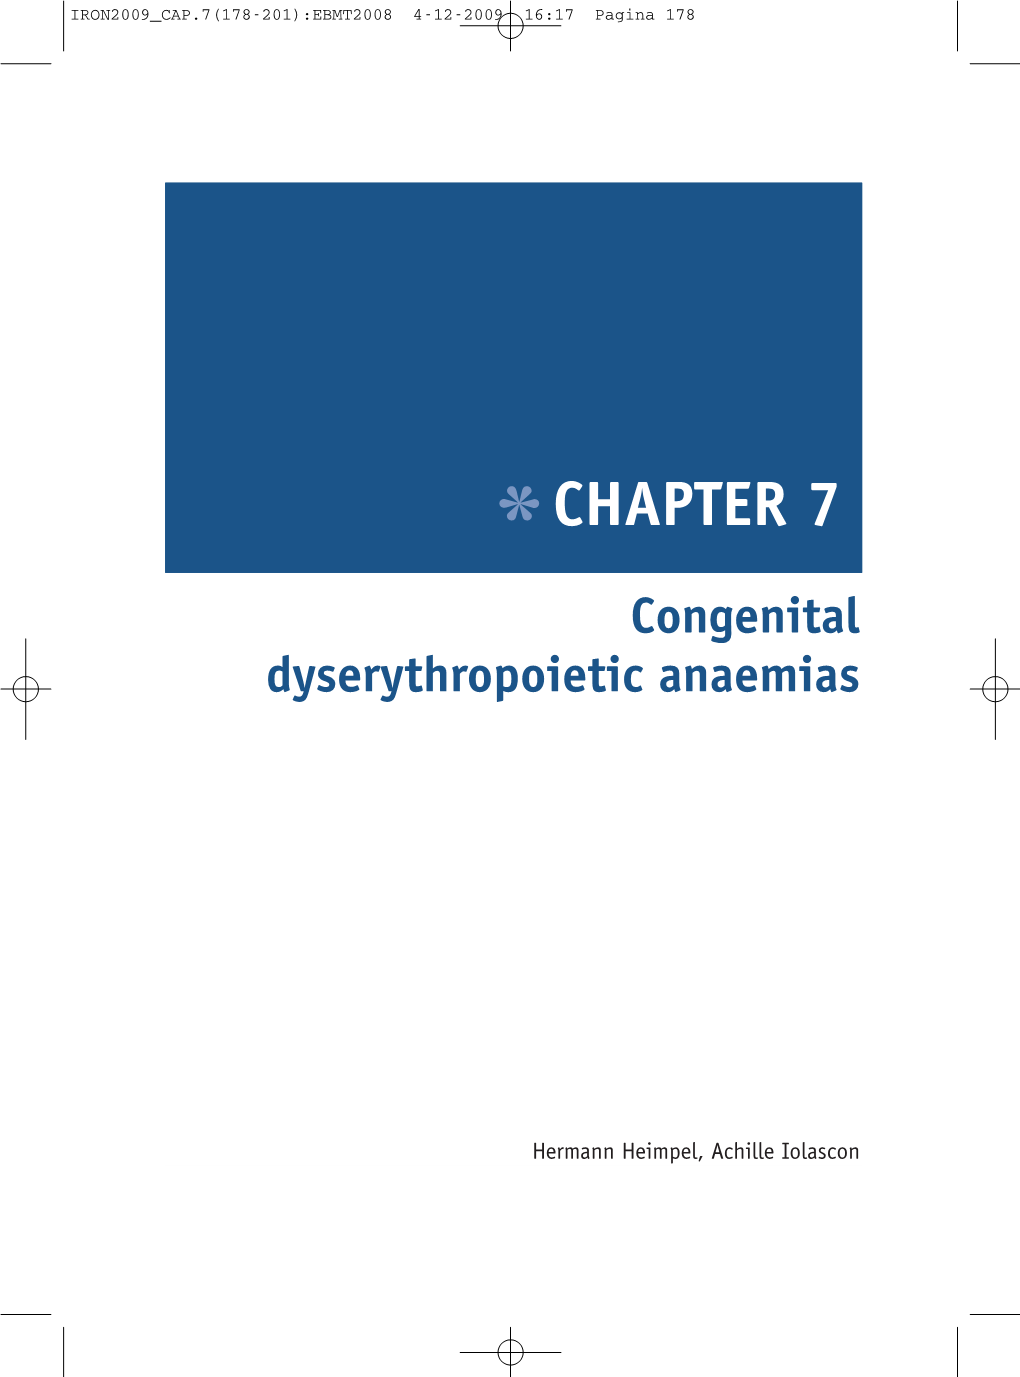 Congenital Dyserythropoietic Anaemias